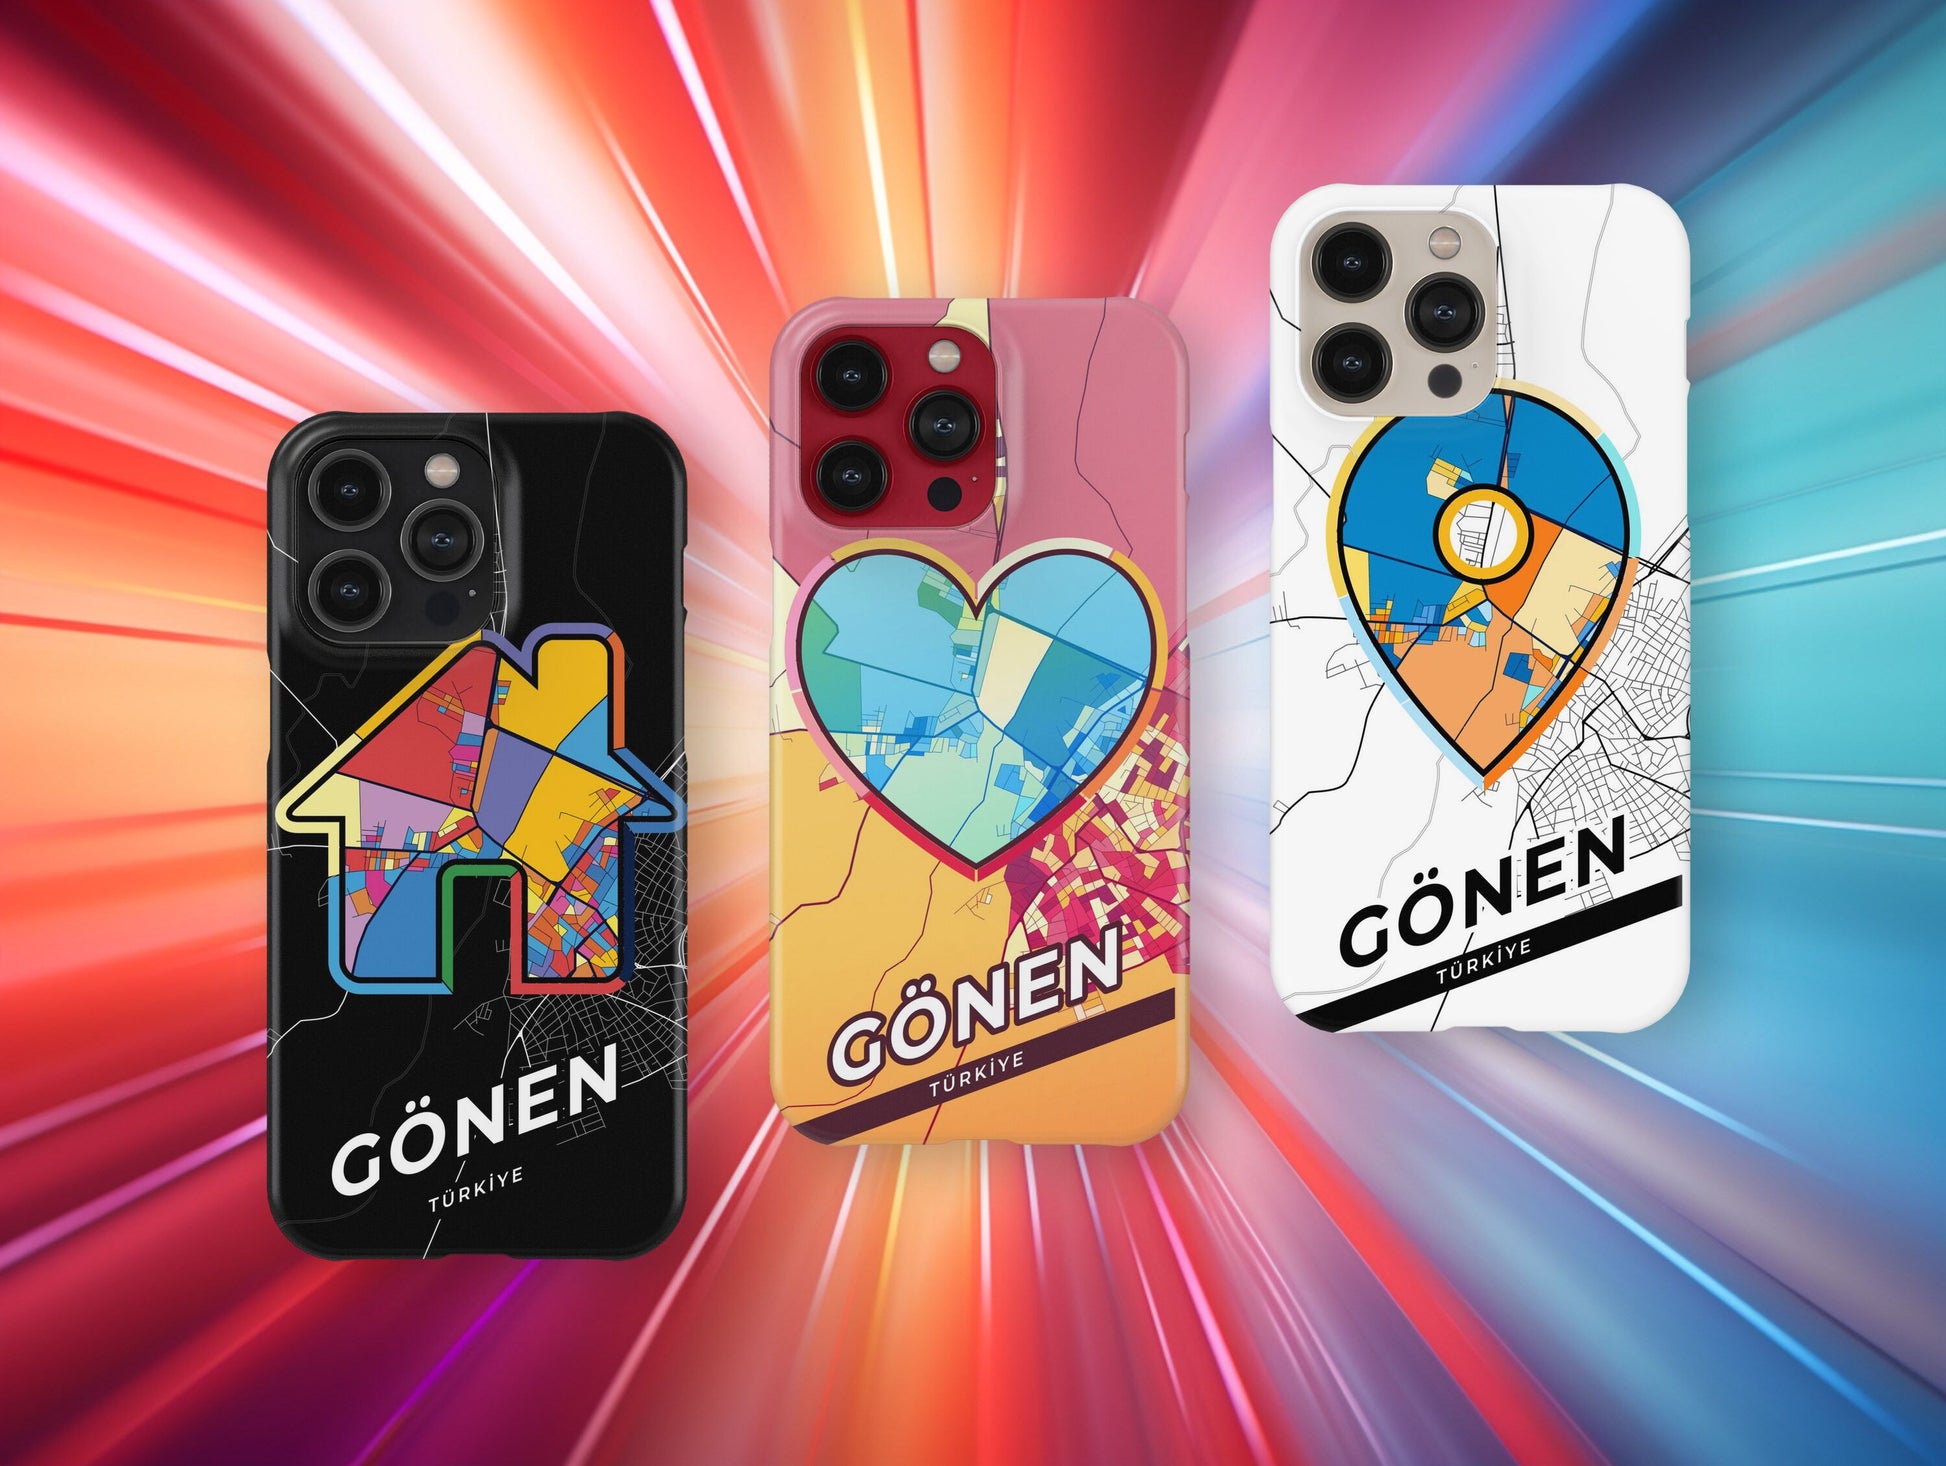 Gönen Turkey slim phone case with colorful icon. Birthday, wedding or housewarming gift. Couple match cases.